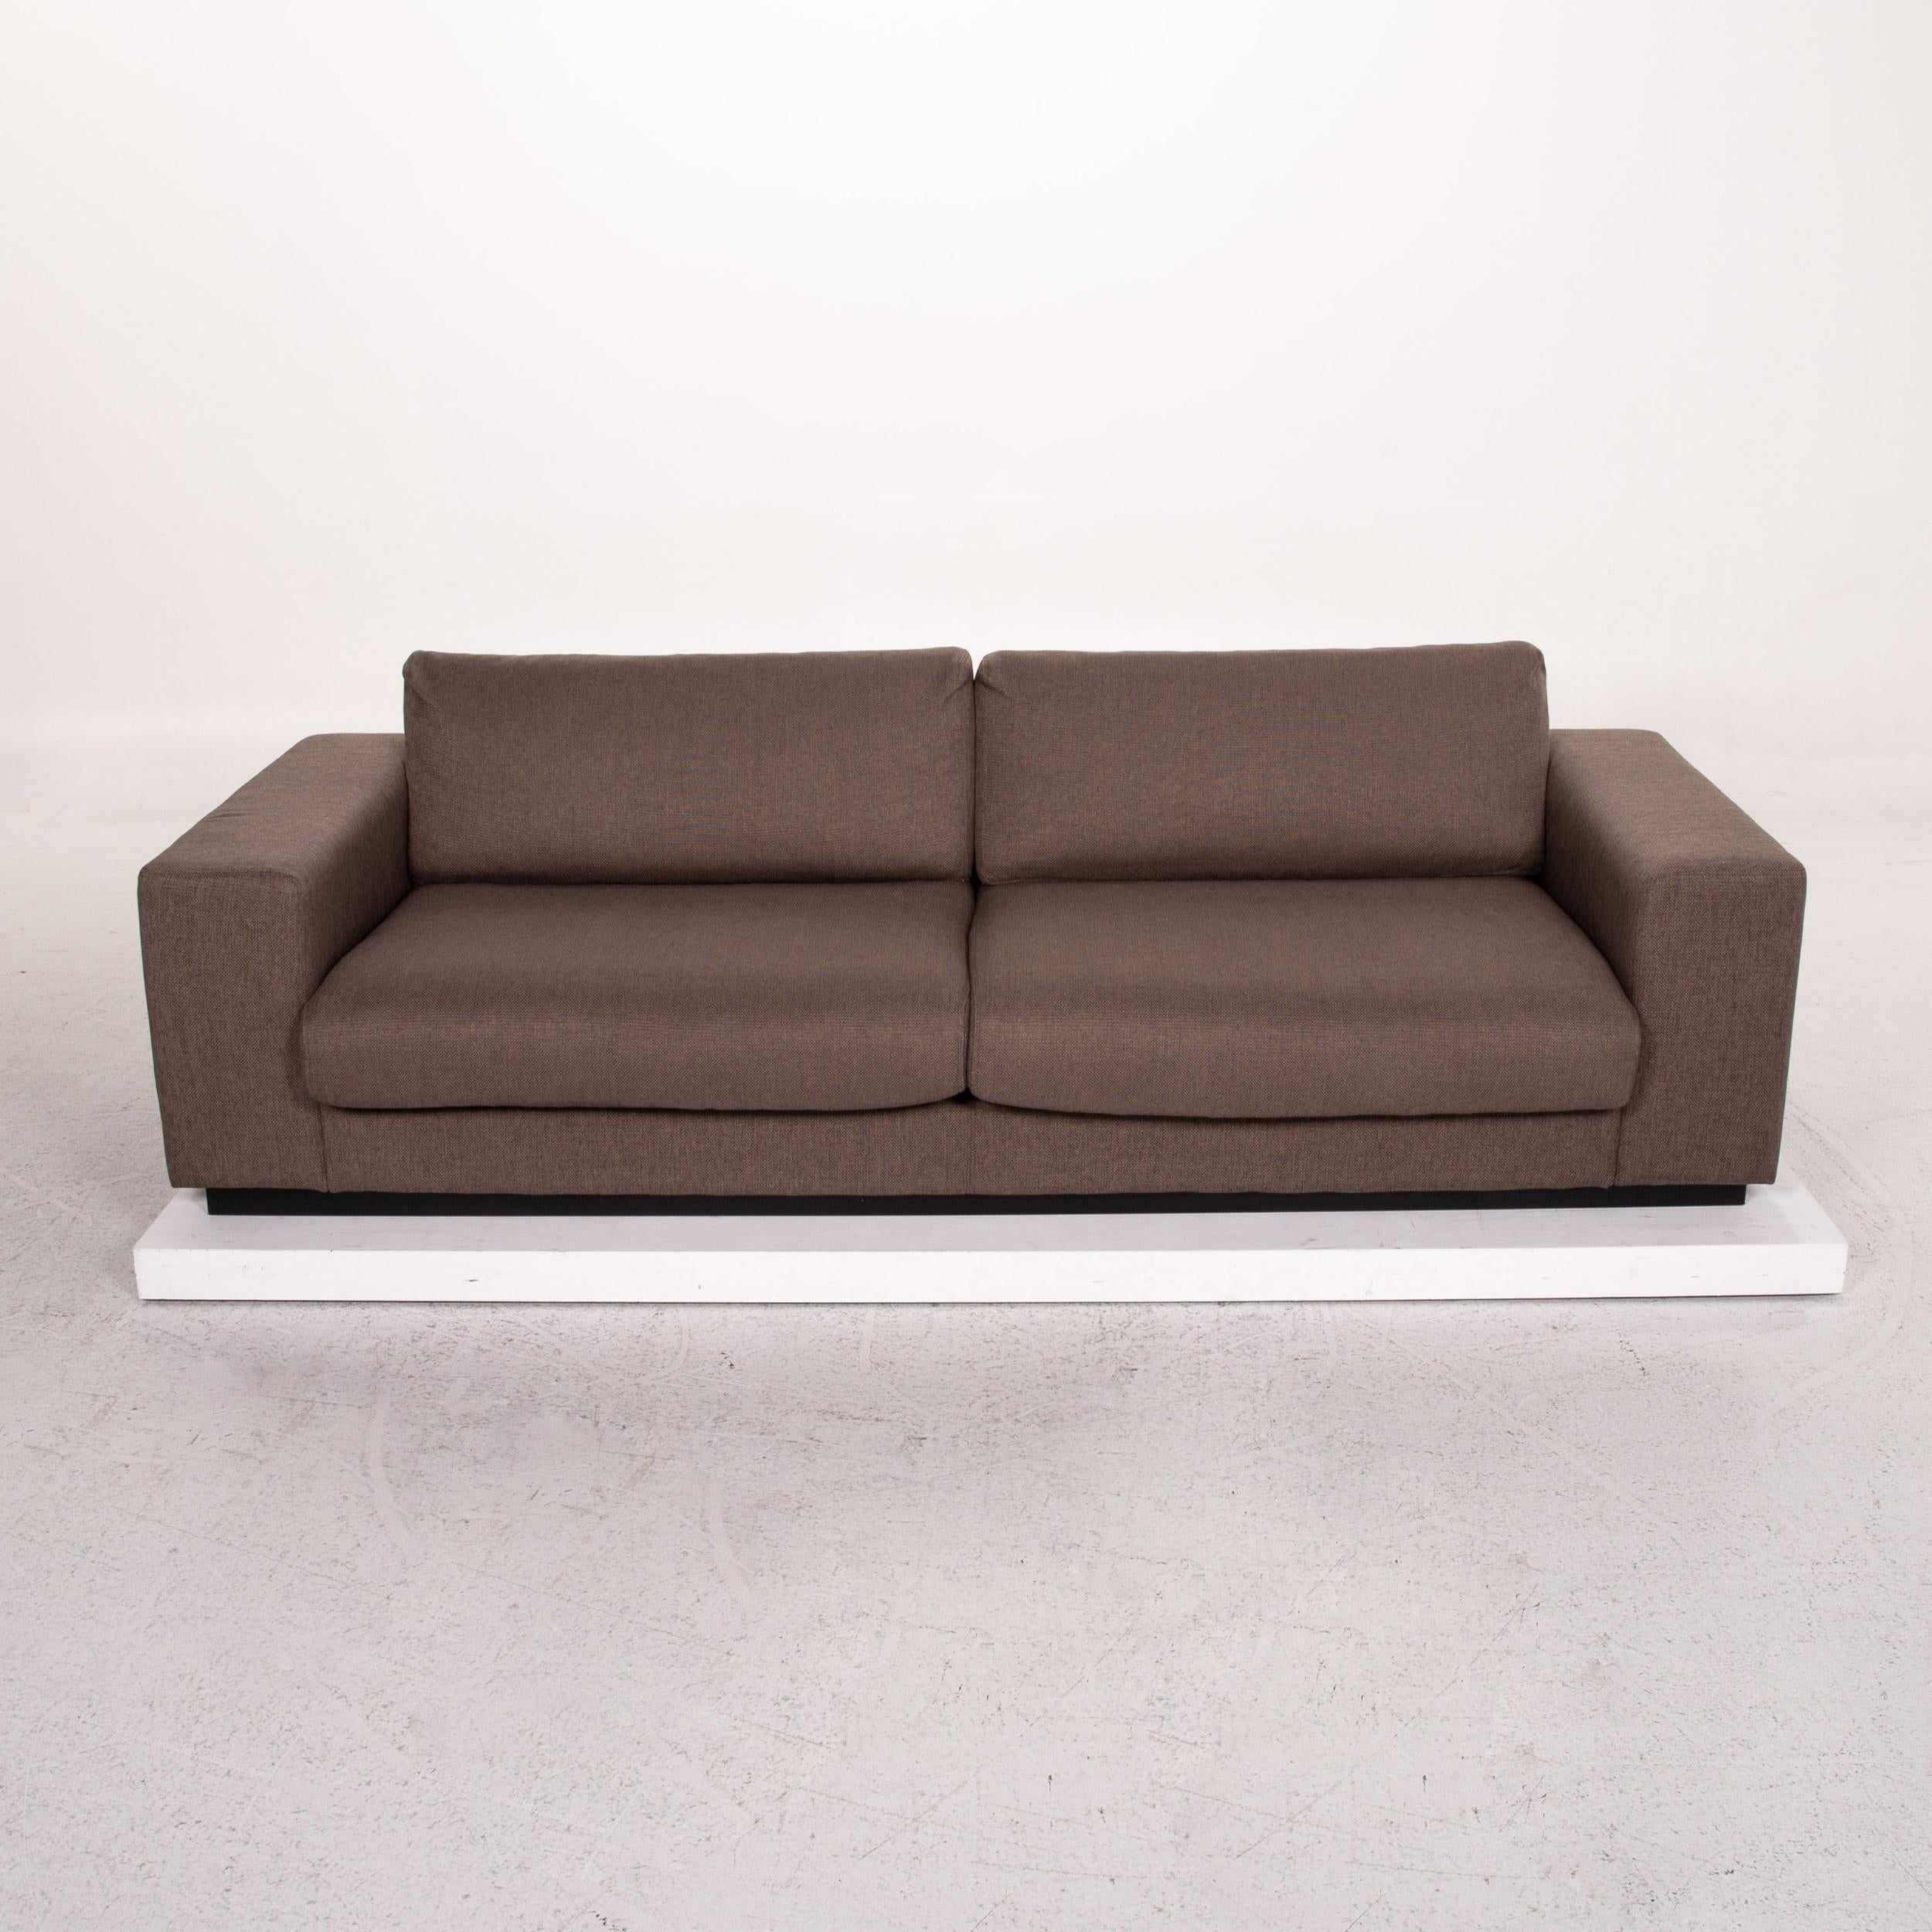 Danish Bolia Sepia Fabric Sofa Brown Three-Seat Couch For Sale